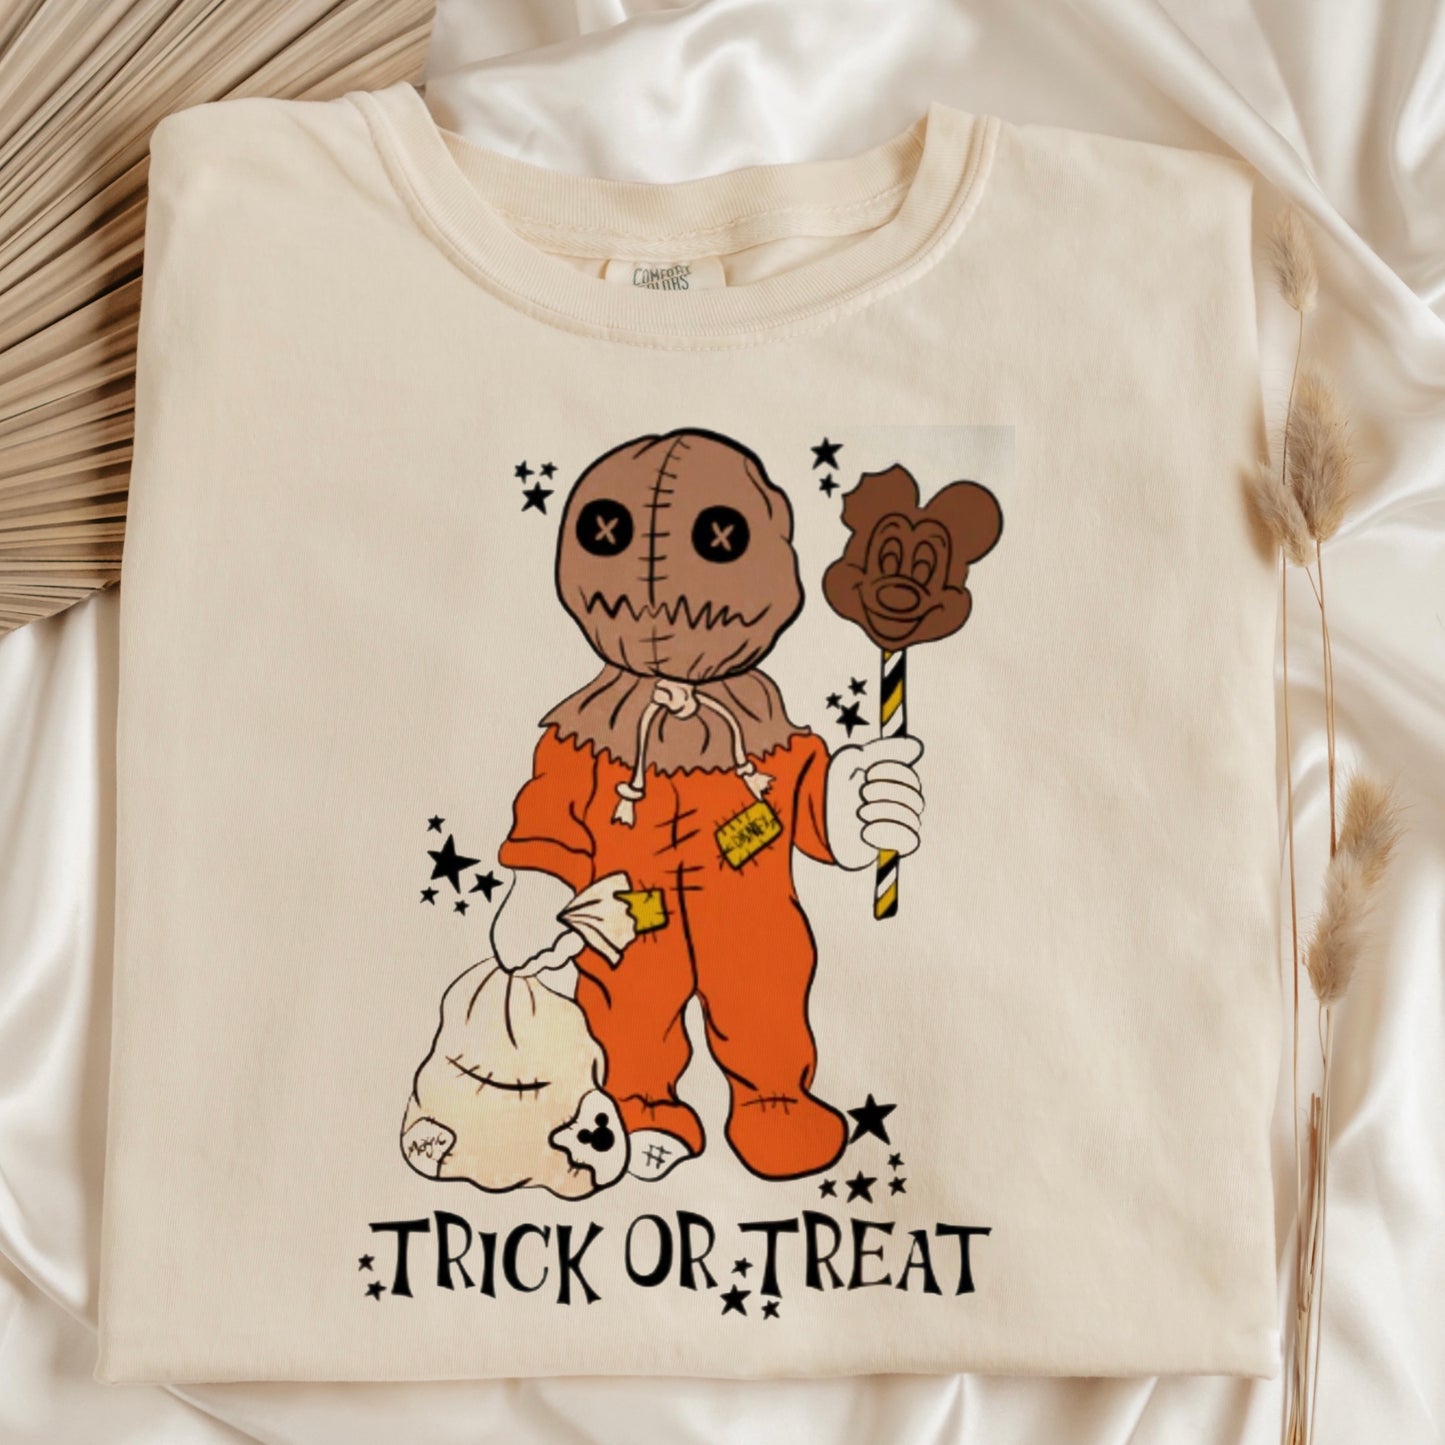 Trick treat unisex adult T-shirt